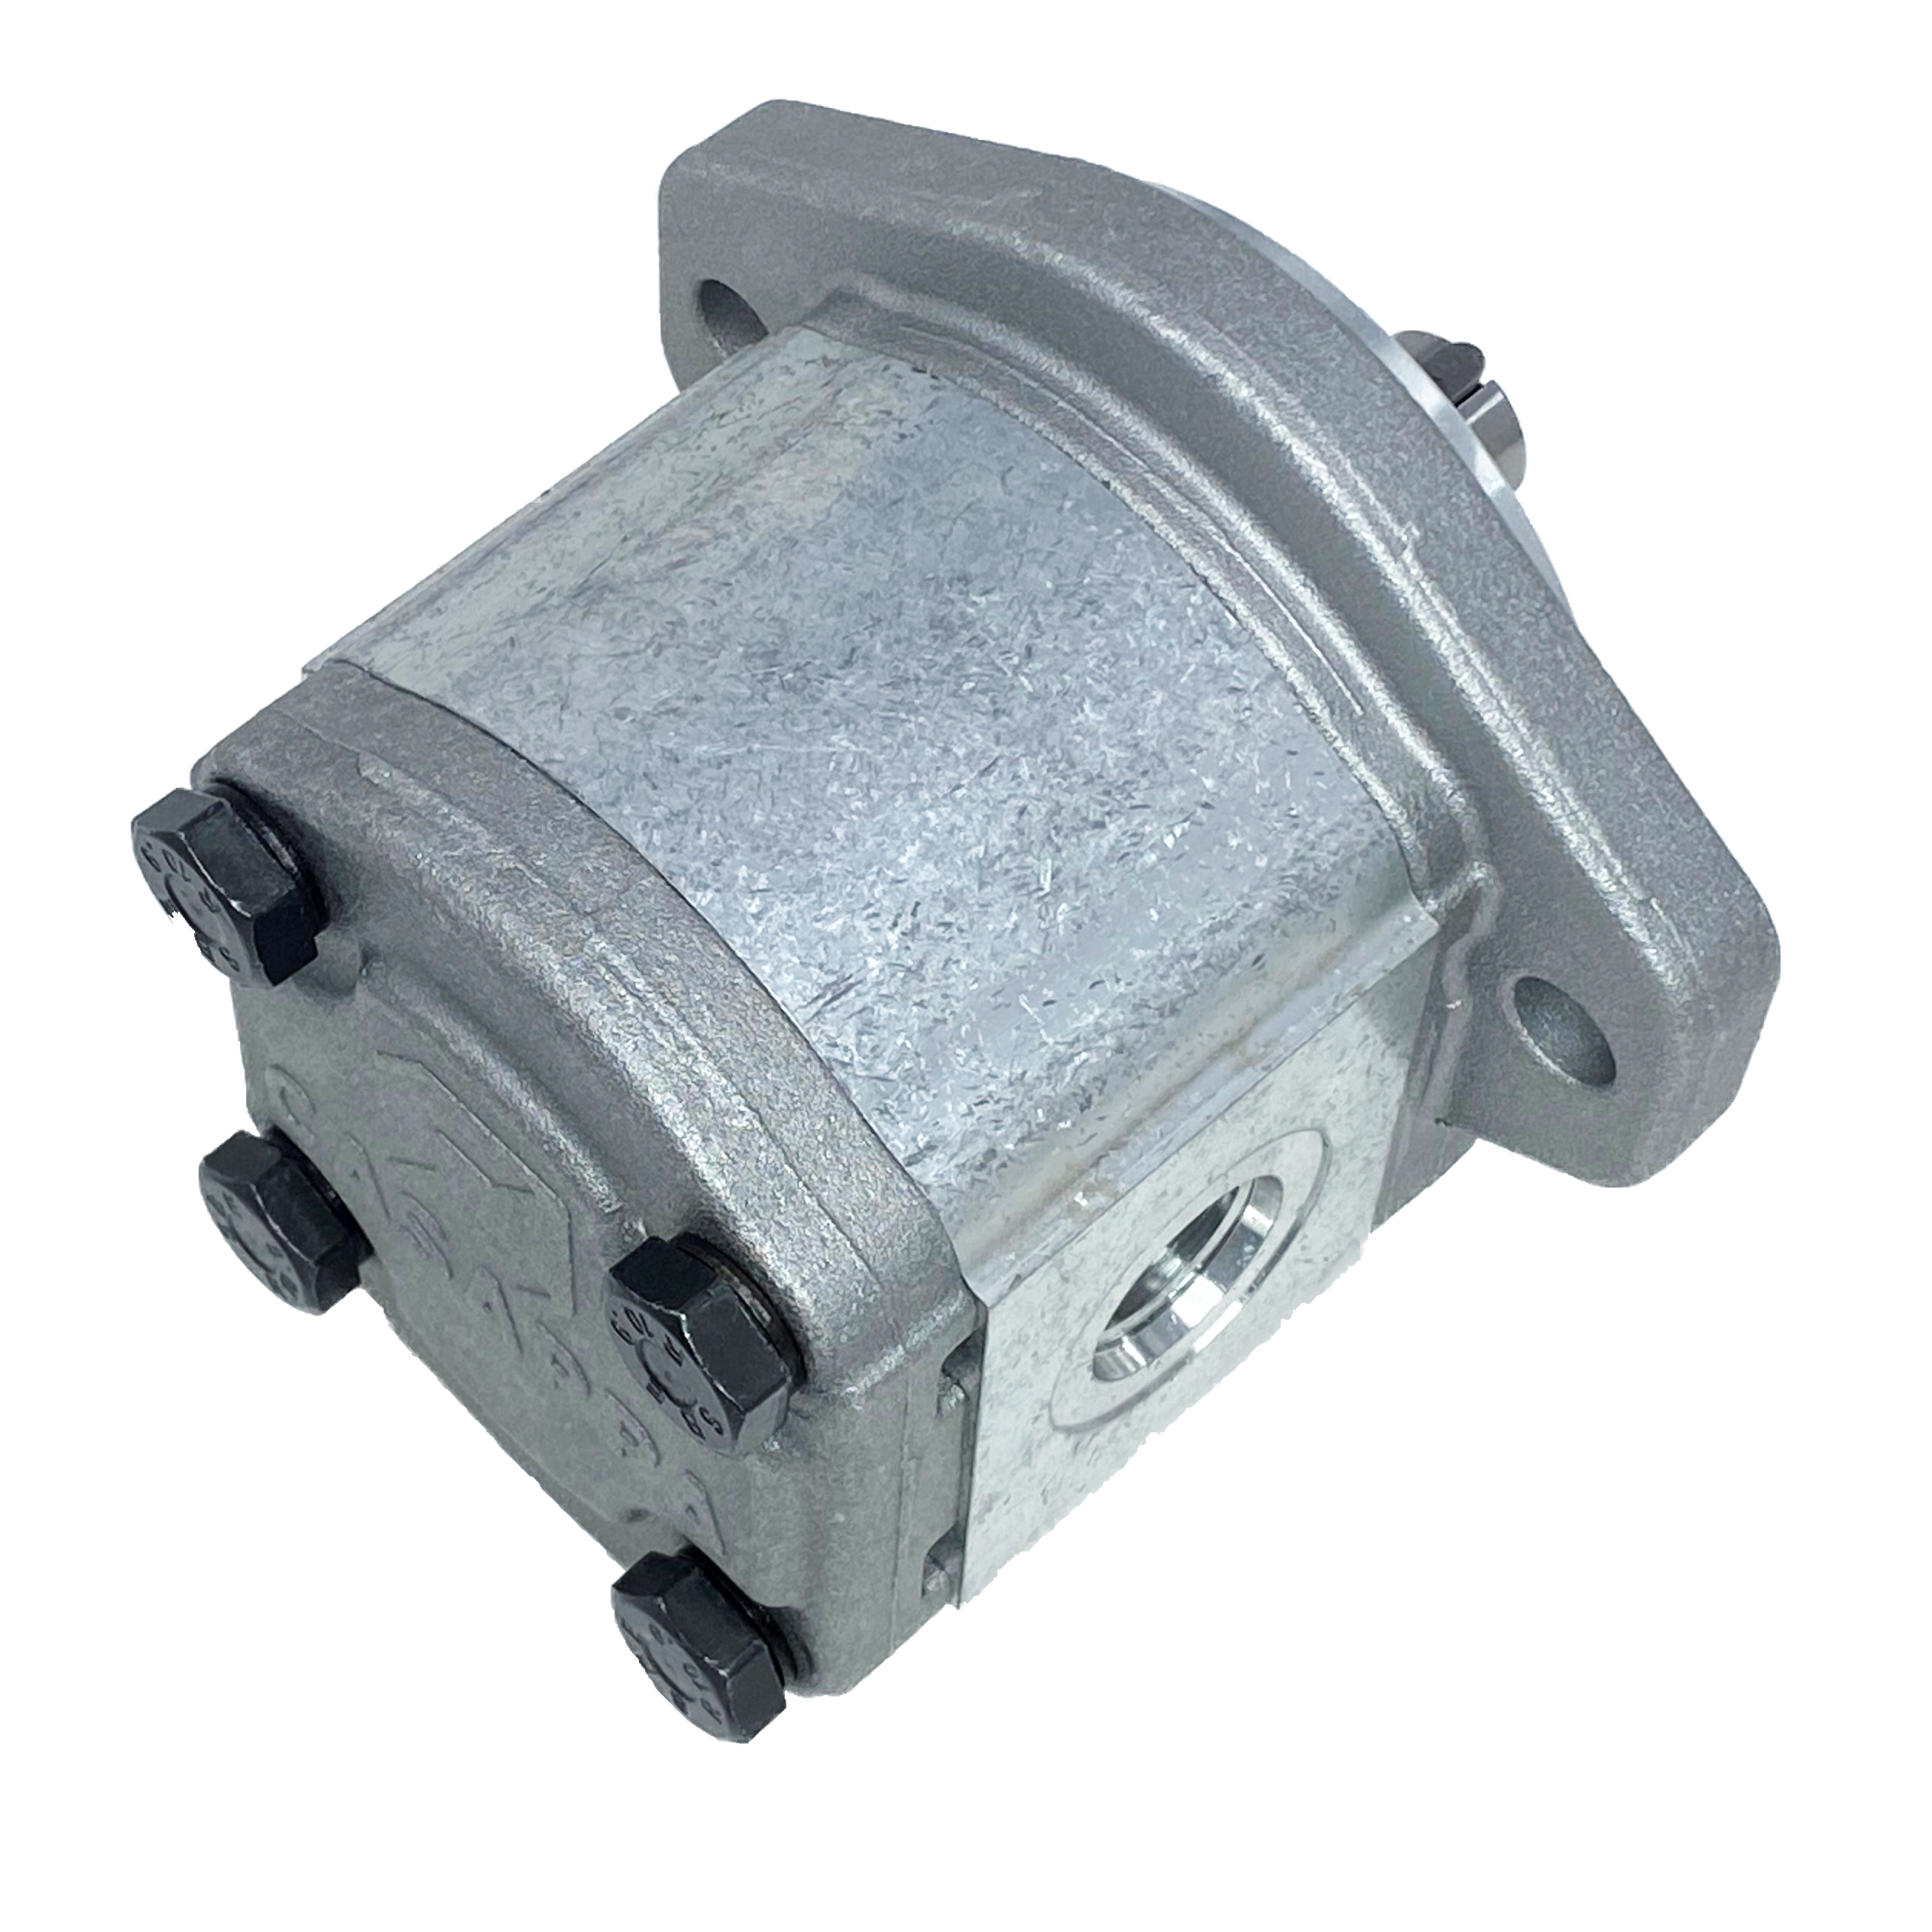 PLM20.8B0-50S1-LOC/OC-N-EL : Casappa Polaris Gear Motor, 8.26cc, 3625psi Rated, 3500RPM, Reversible Interior Drain, 3/4" Bore x 3/16" Key Shaft, SAE A 2-Bolt Flange, 0.625 (5/8") #10 SAE Inlet, 0.625 (5/8") #10 SAE Outlet, Aluminum Body & Flange